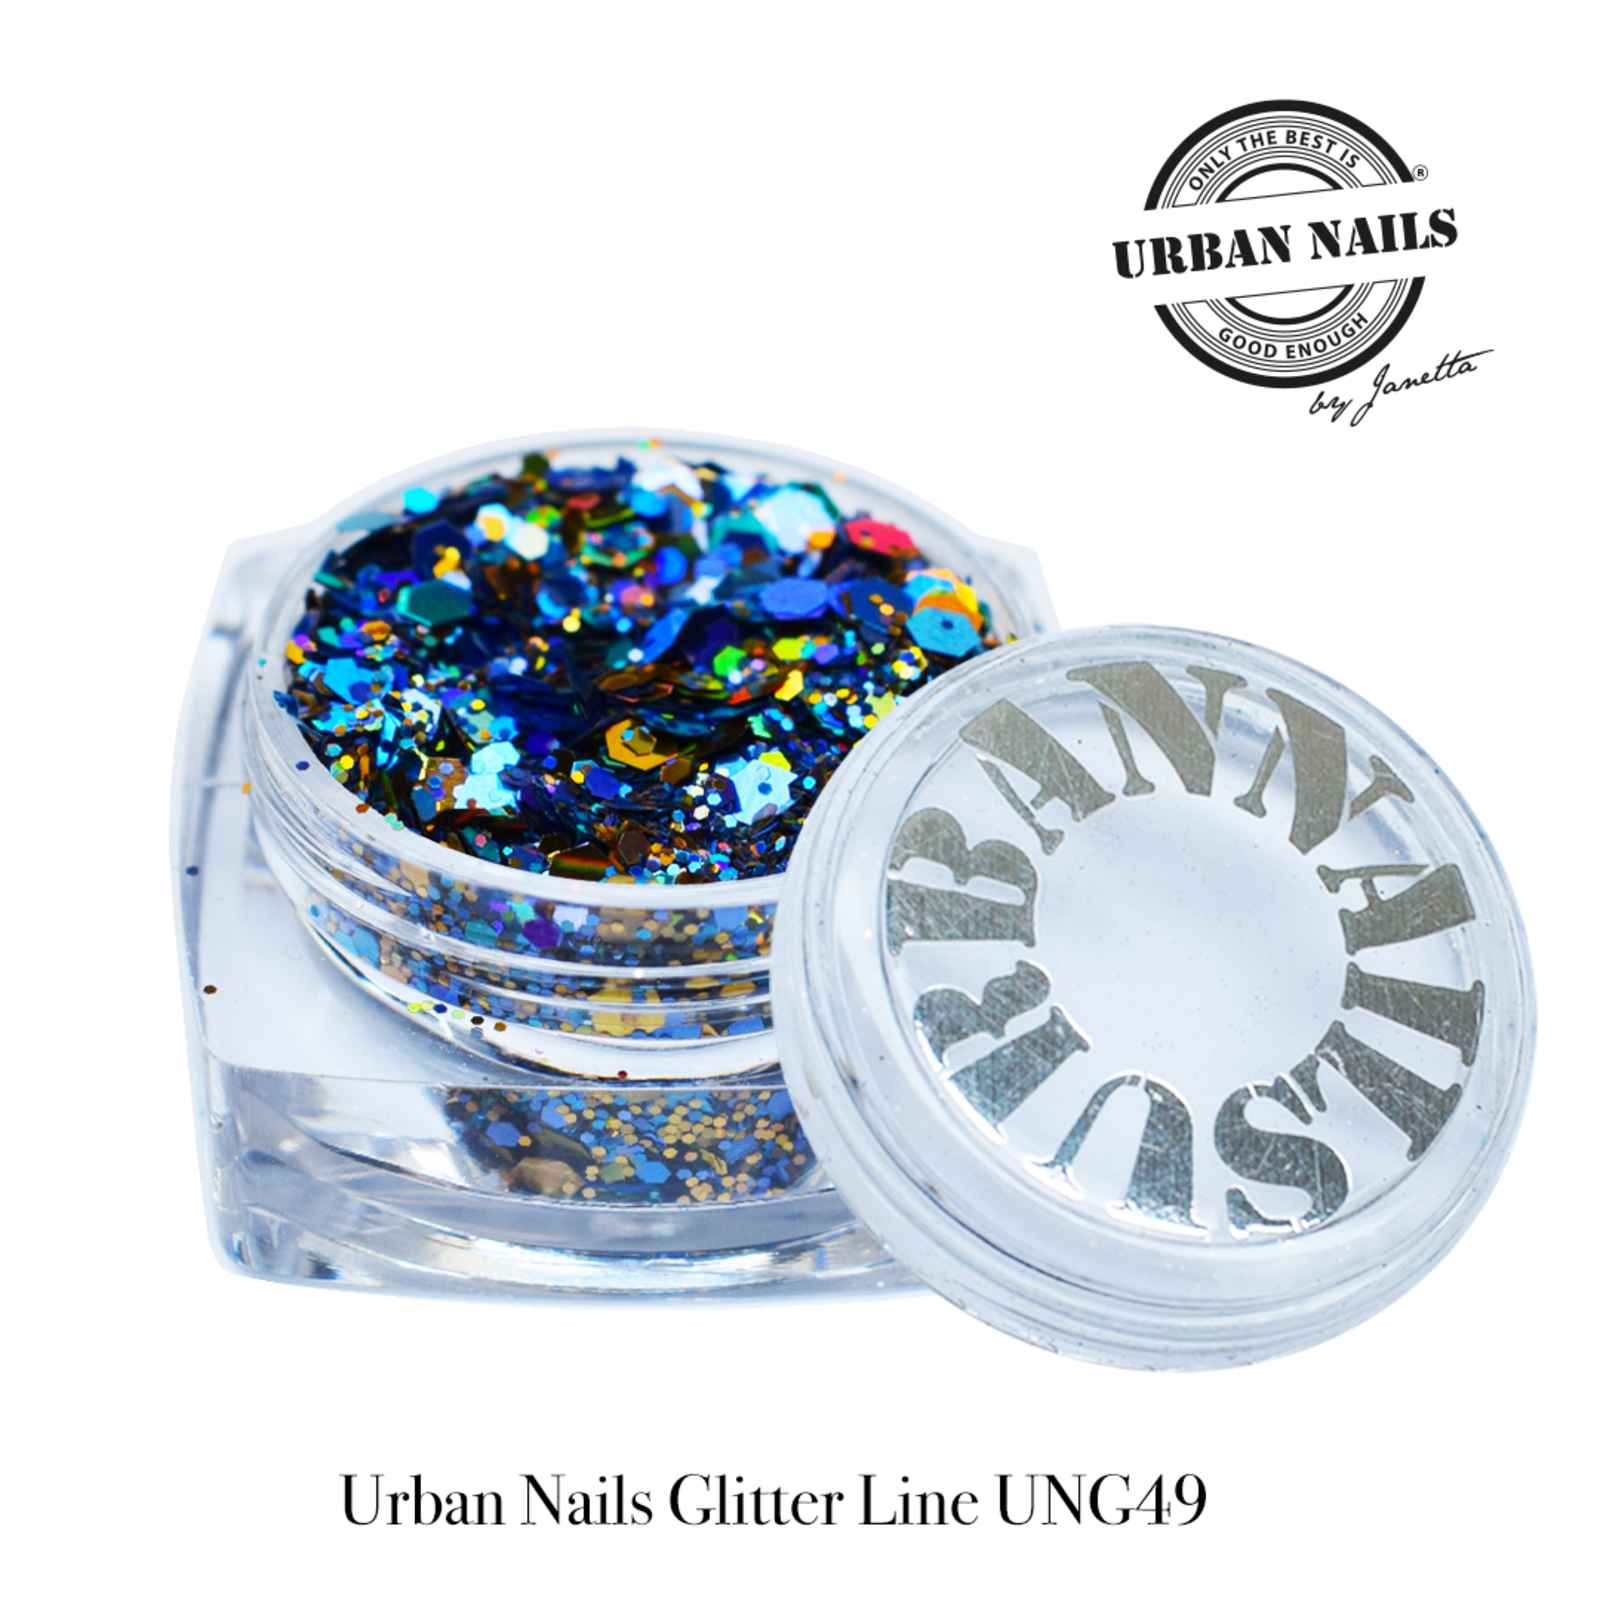 Urban nails Glitter Line UNG49